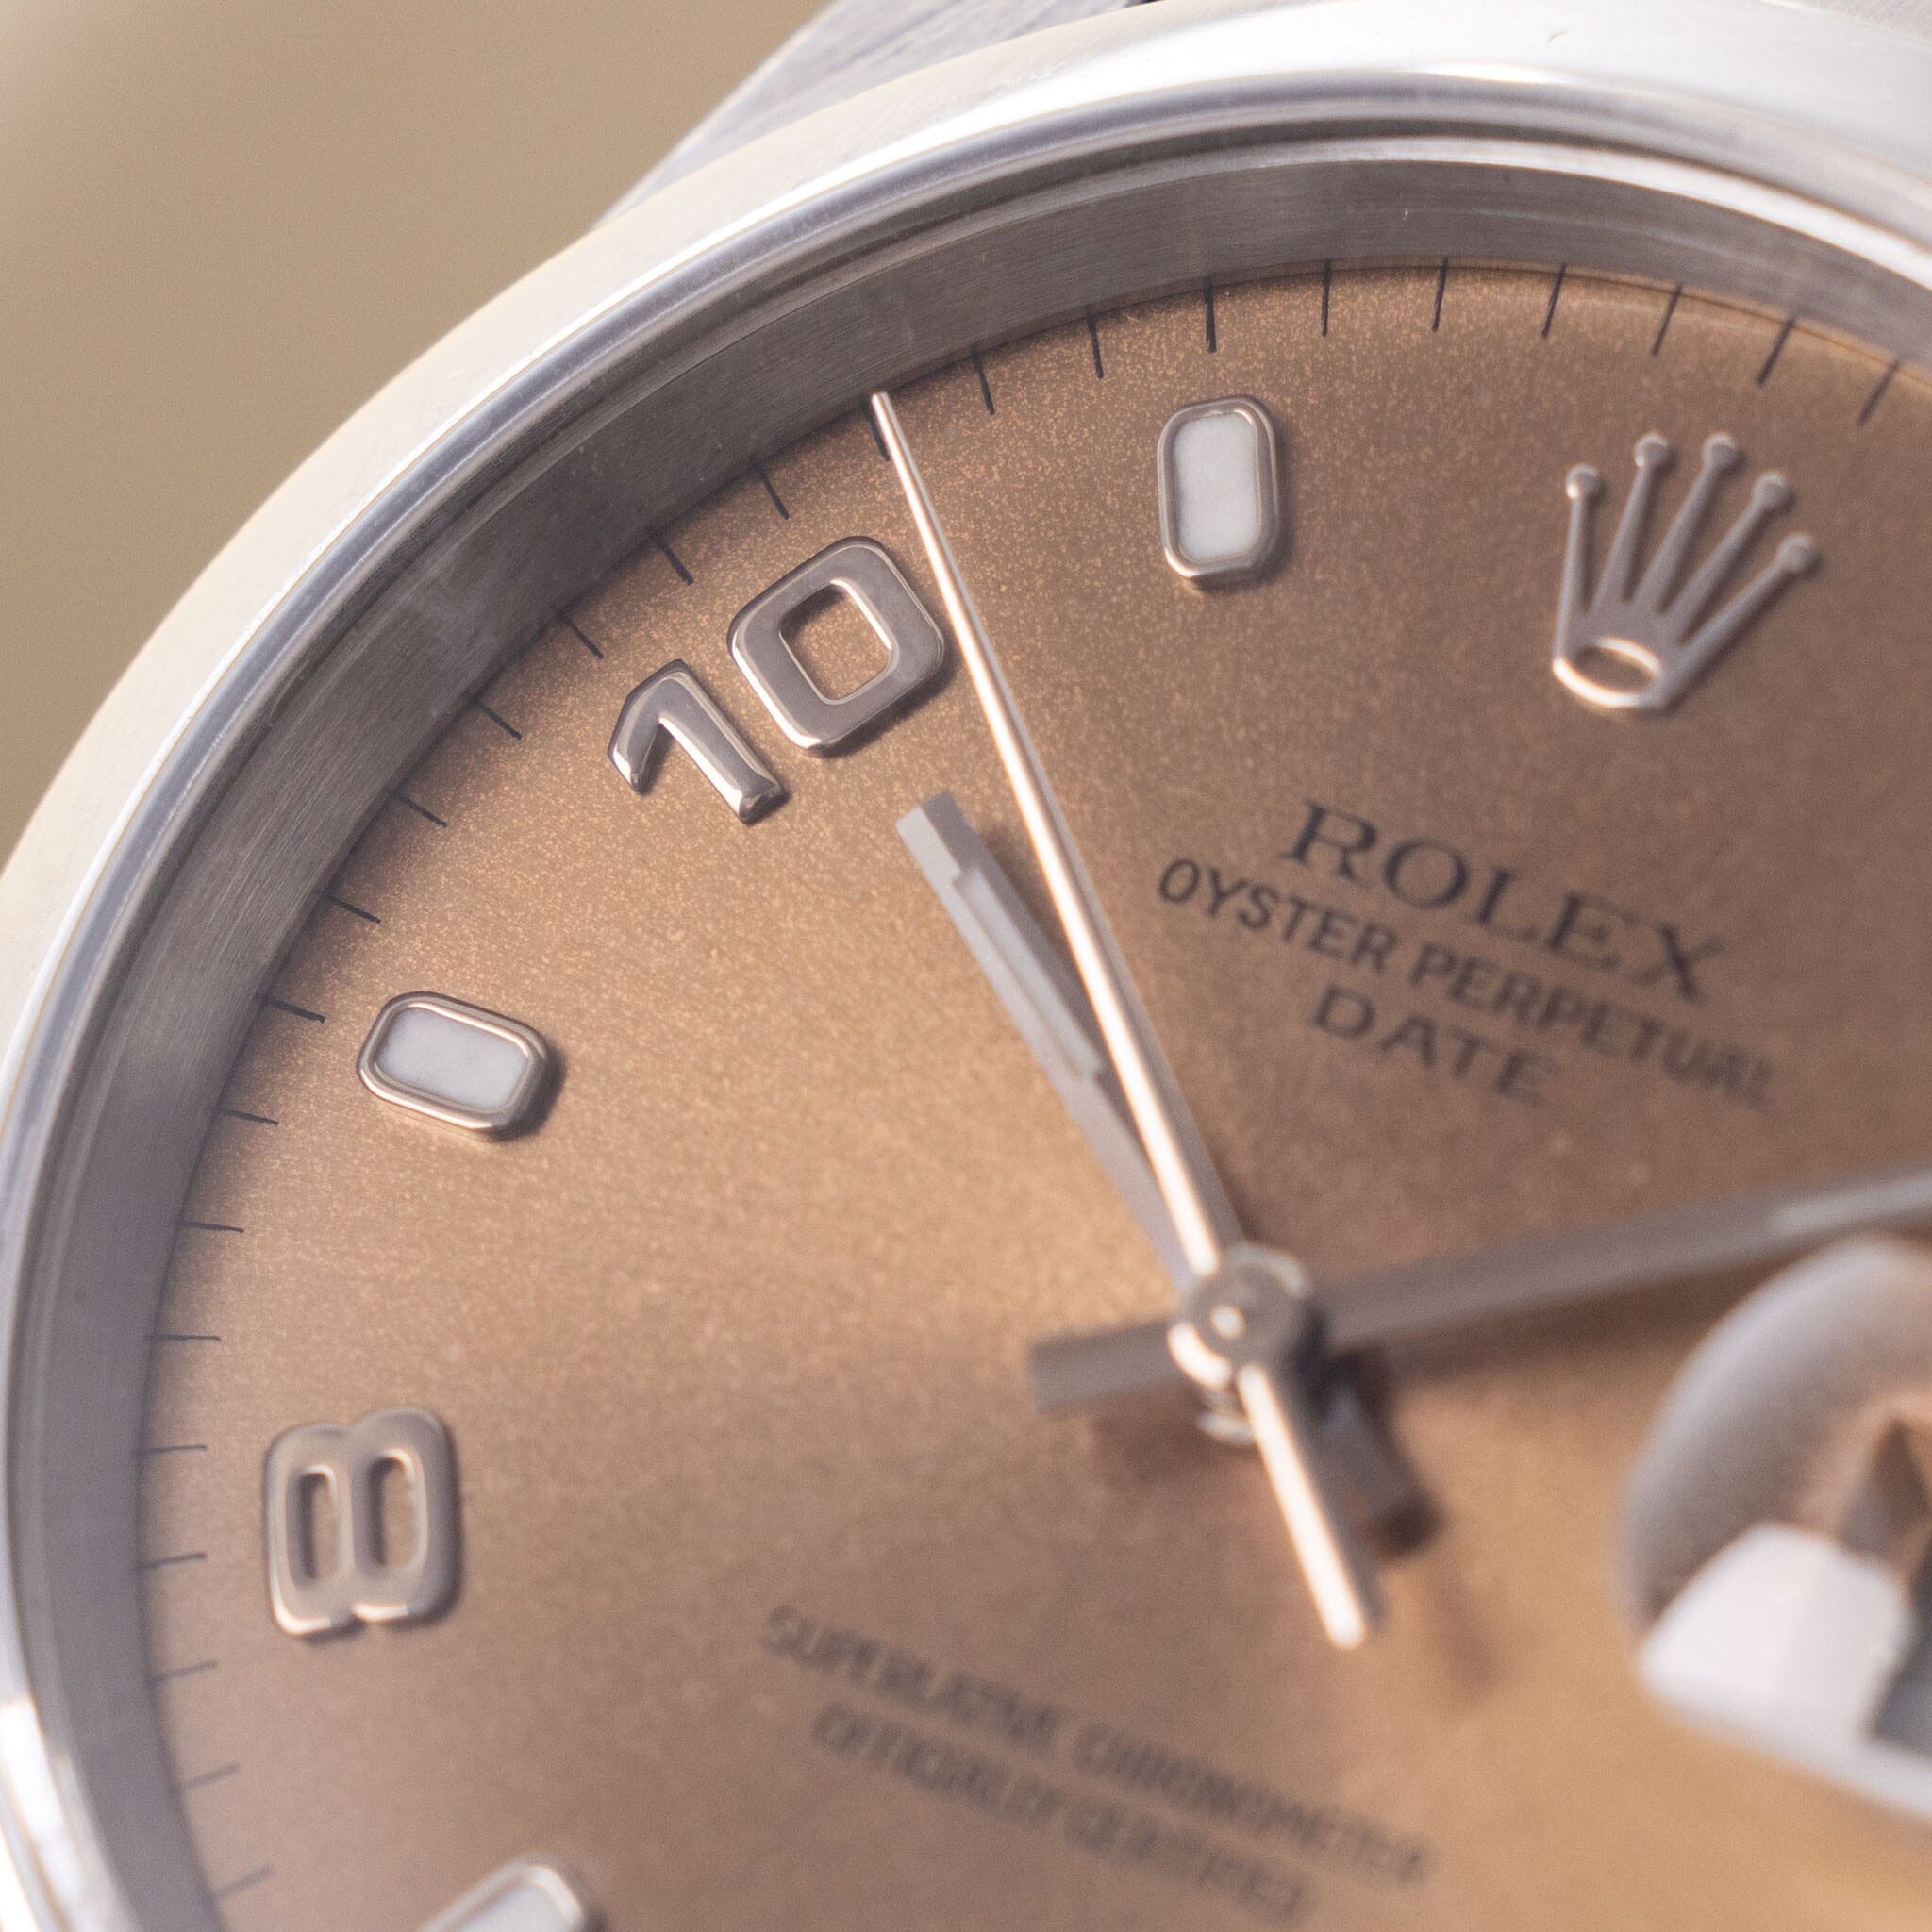 Rolex Oyster Perpetual Date Bronze Dial ref 15200